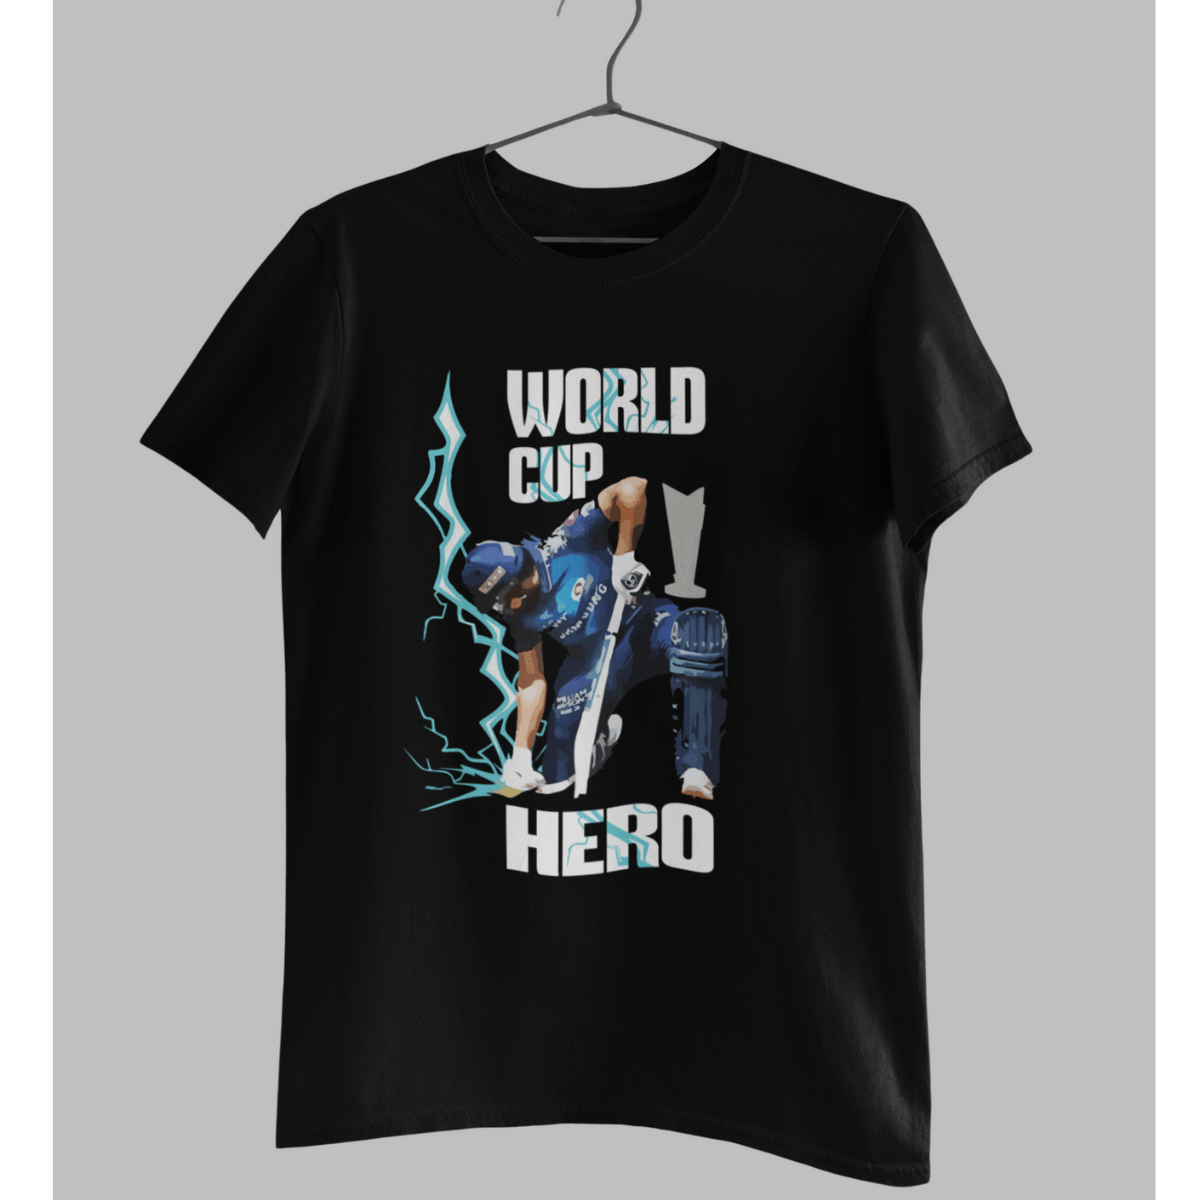 Rohit - world cup hero printed t-shirt